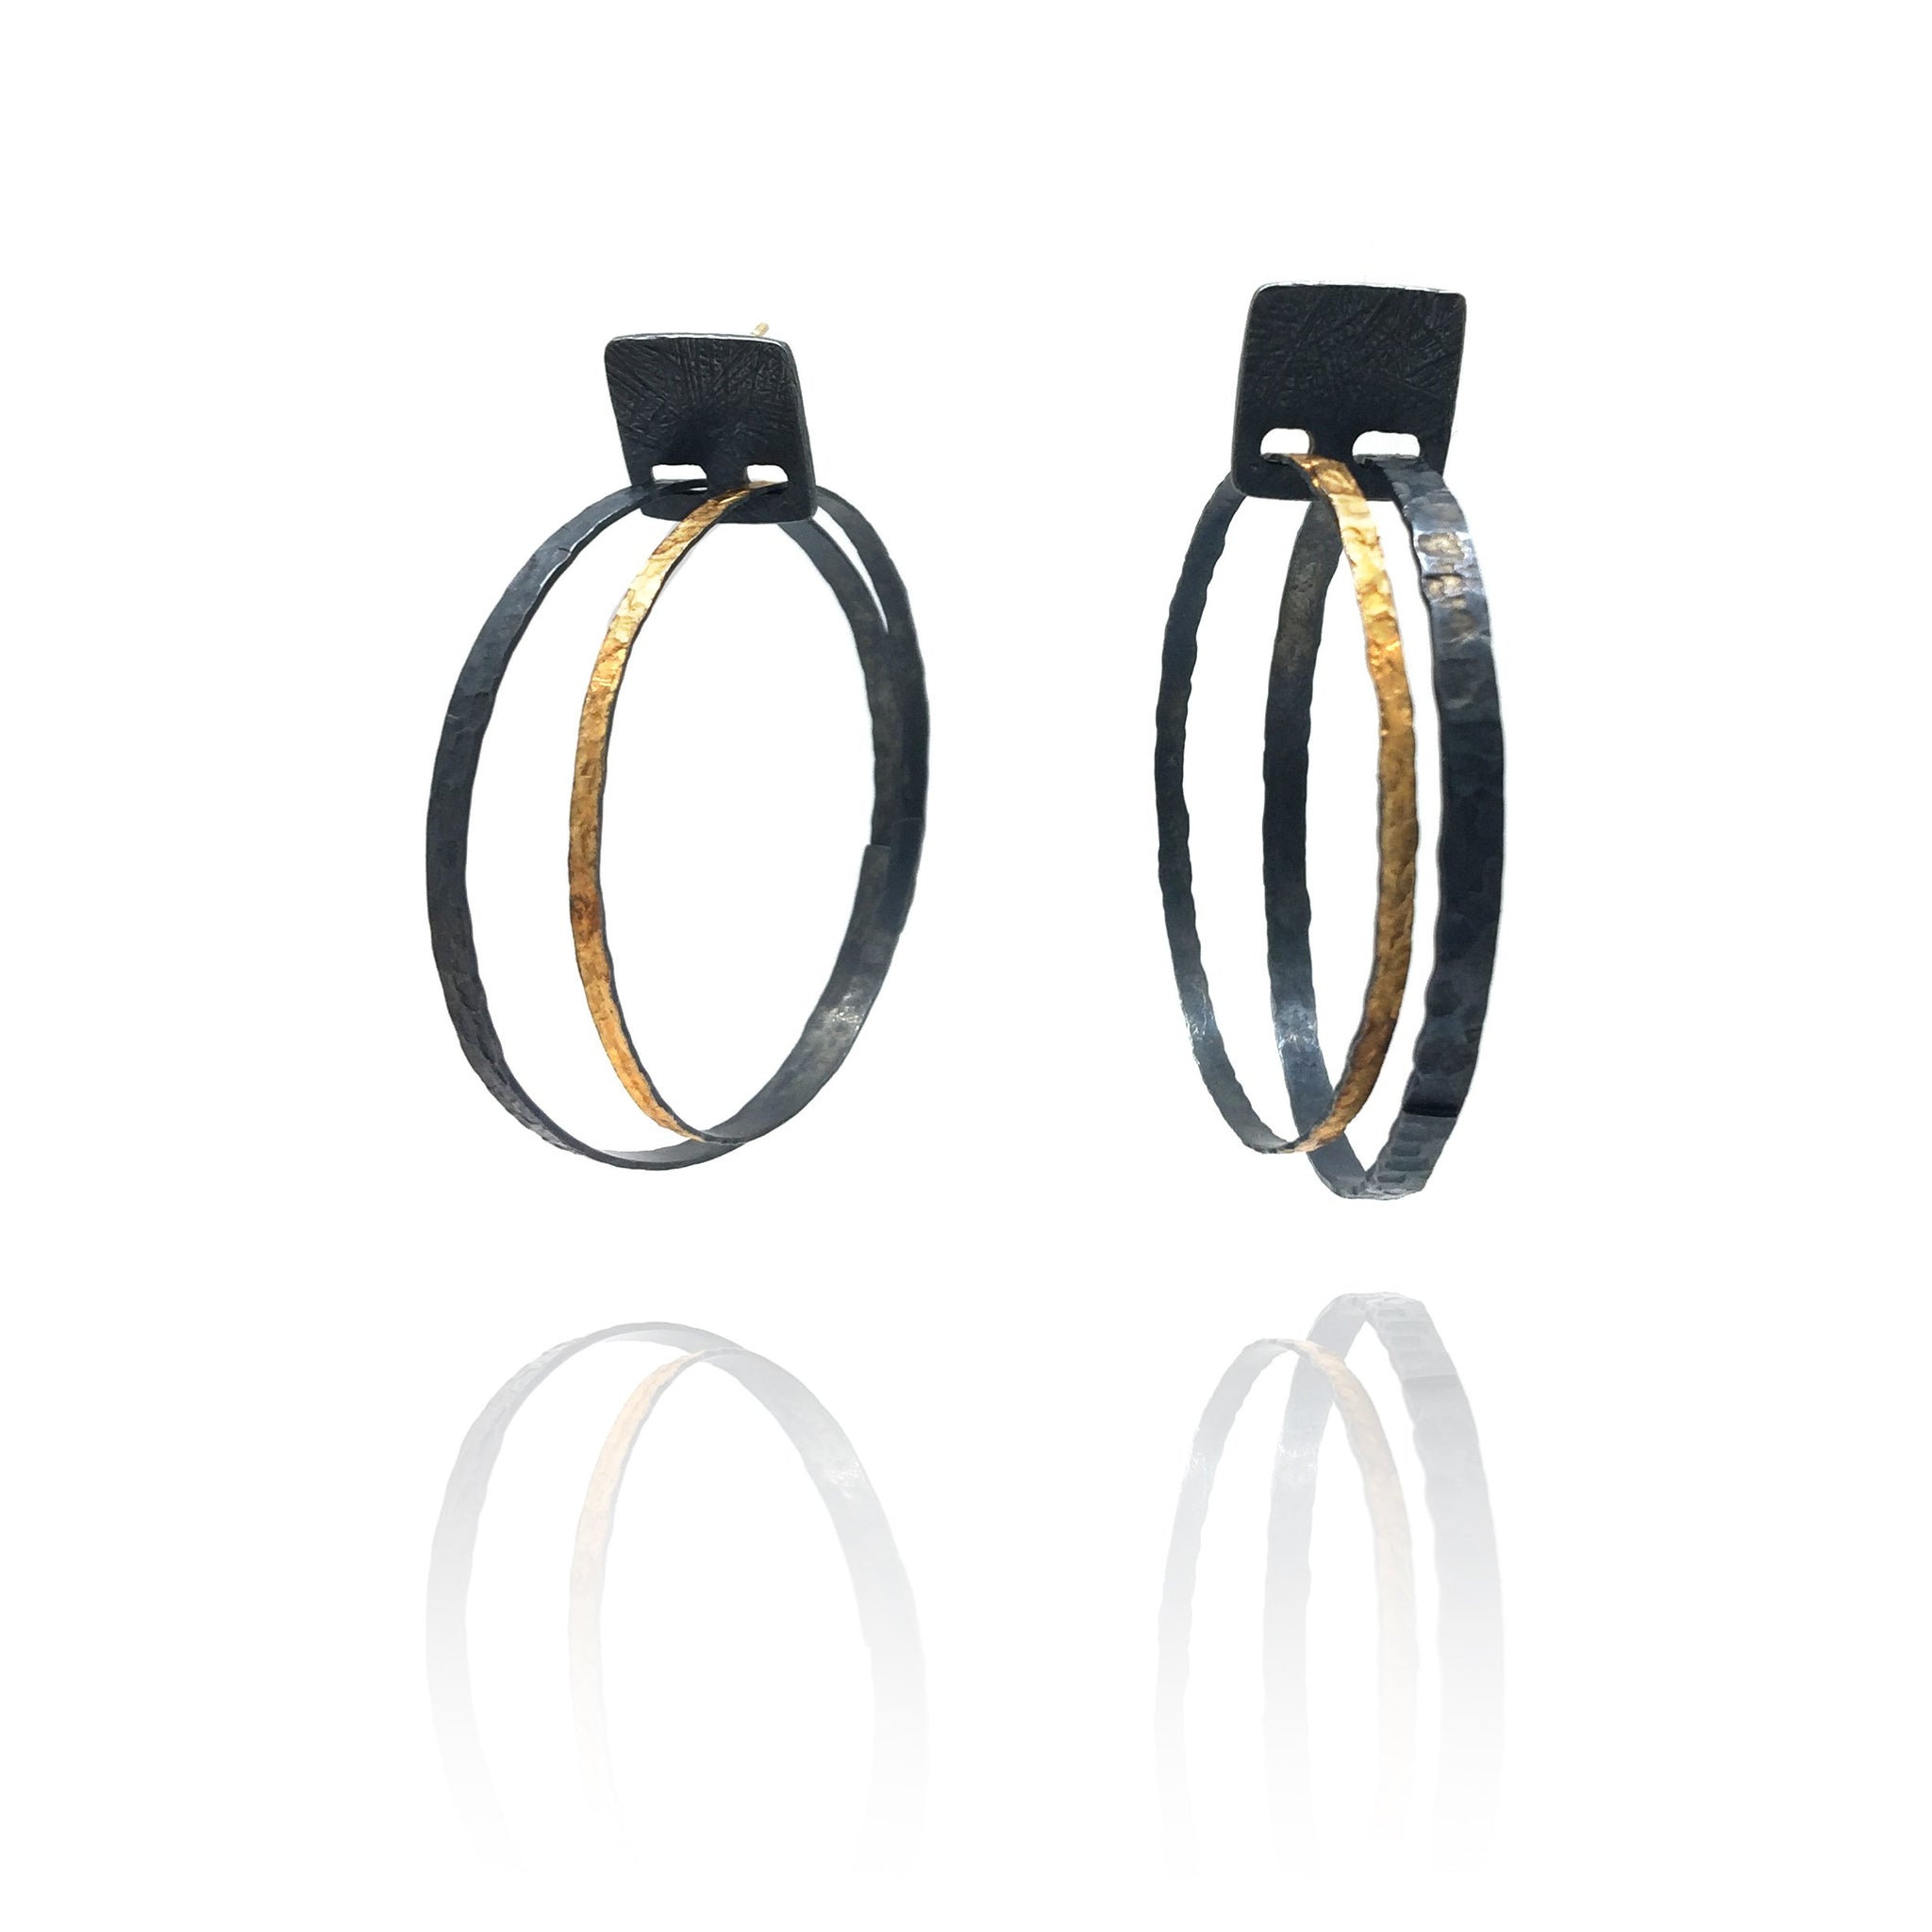 Uncut Diamond Hoop Earrings -Chandbalis in 22K Gold -Indian Gold Jewelry  -Buy Online